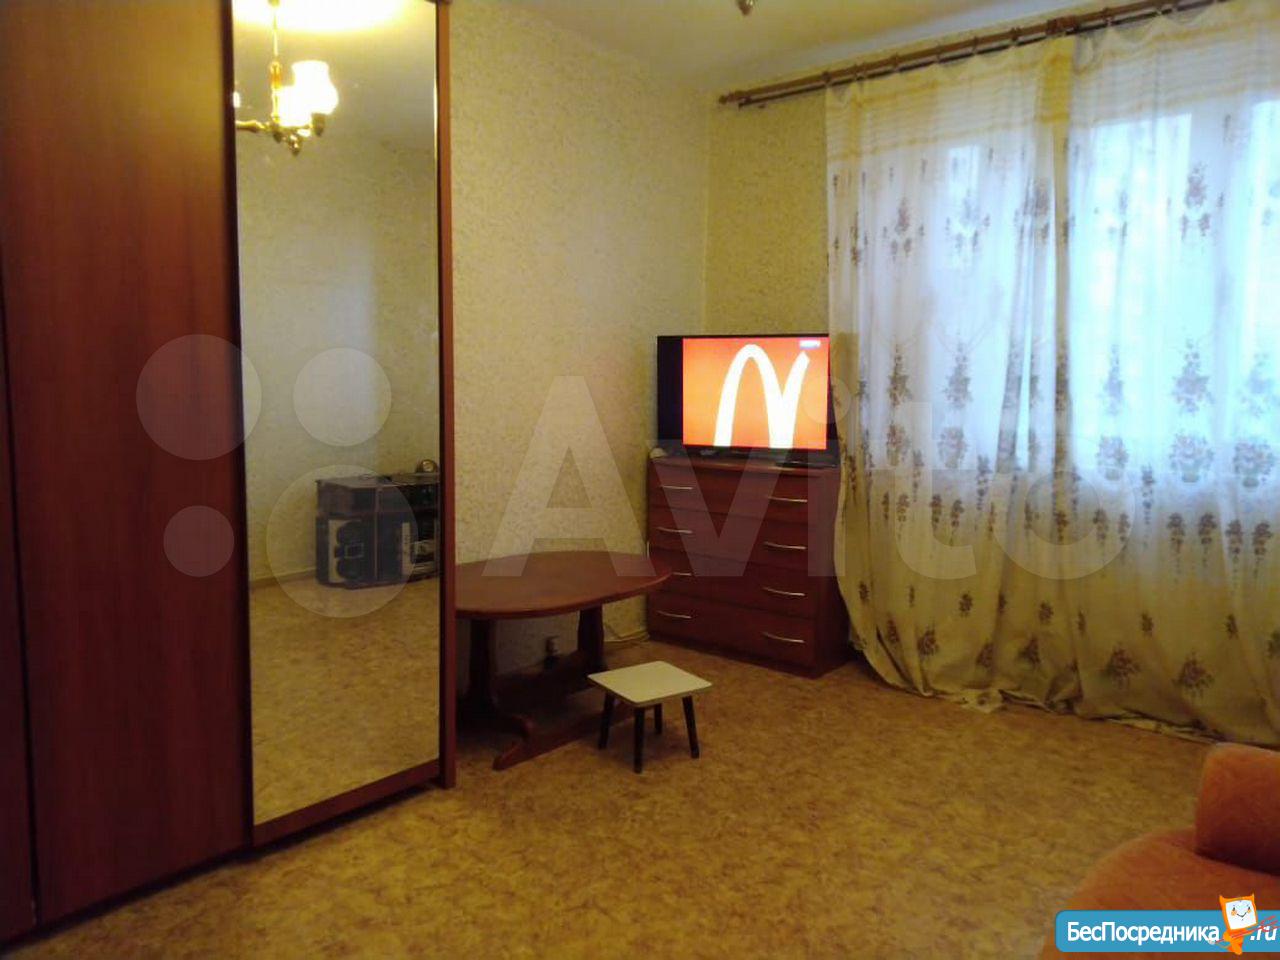 Снять 1-комнатную квартиру в Москве на у. Академика Лазарева д.54 корп